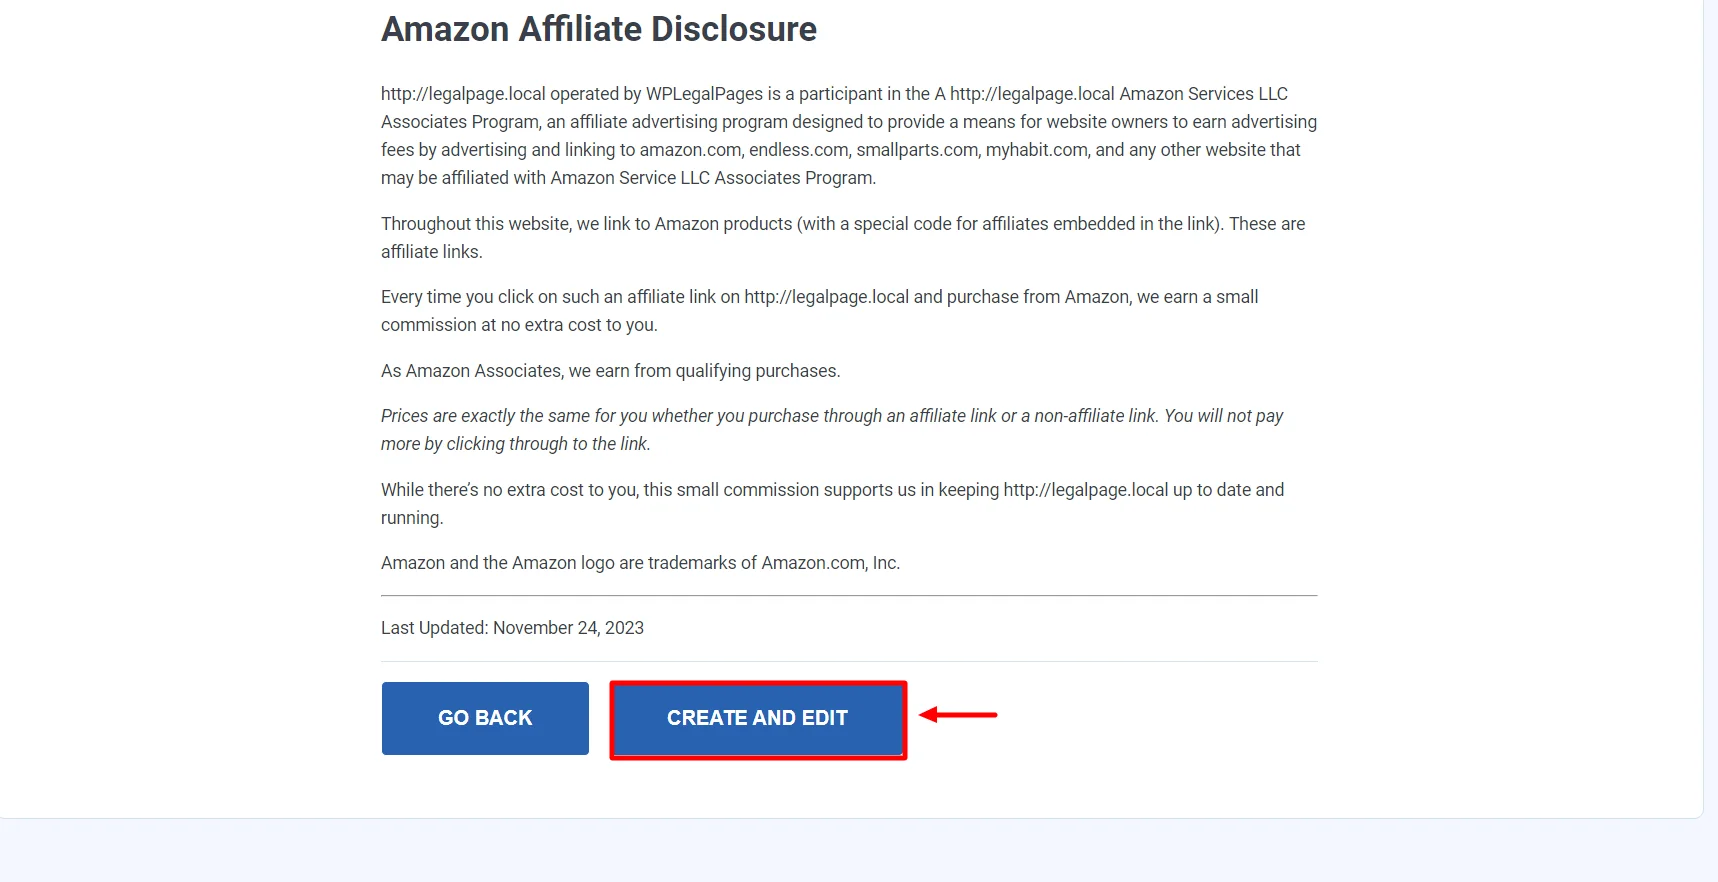 Editing the Amazon affiliate disclosure